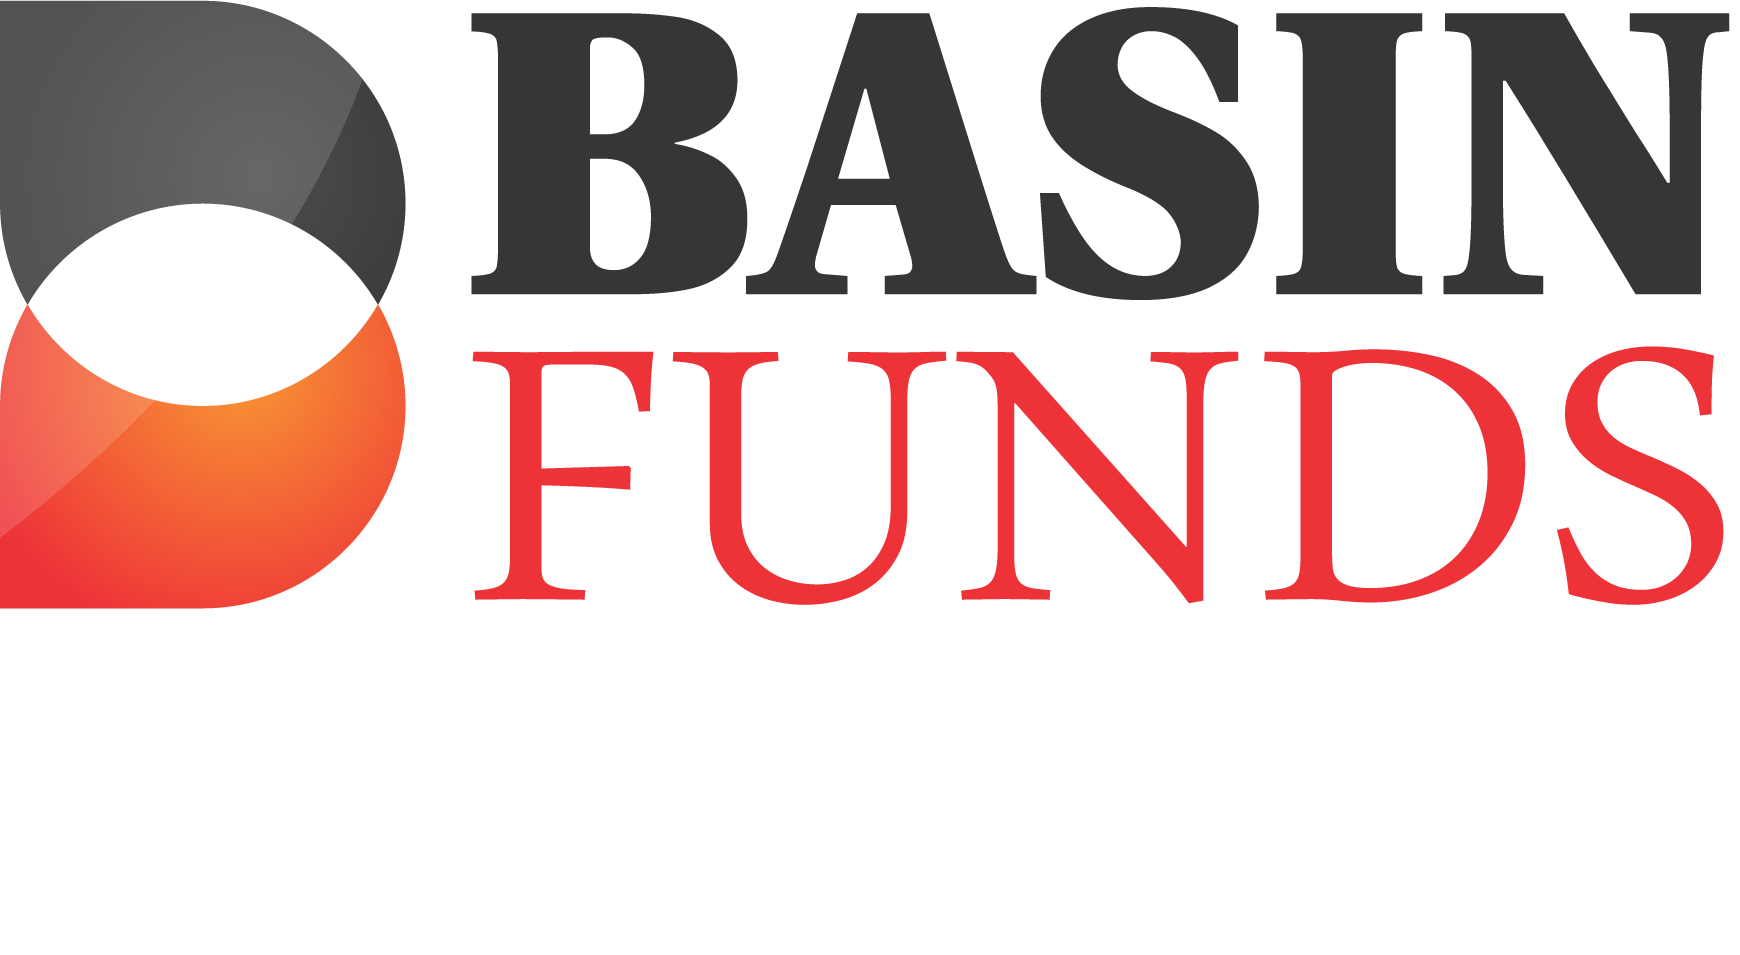 Basin Funds